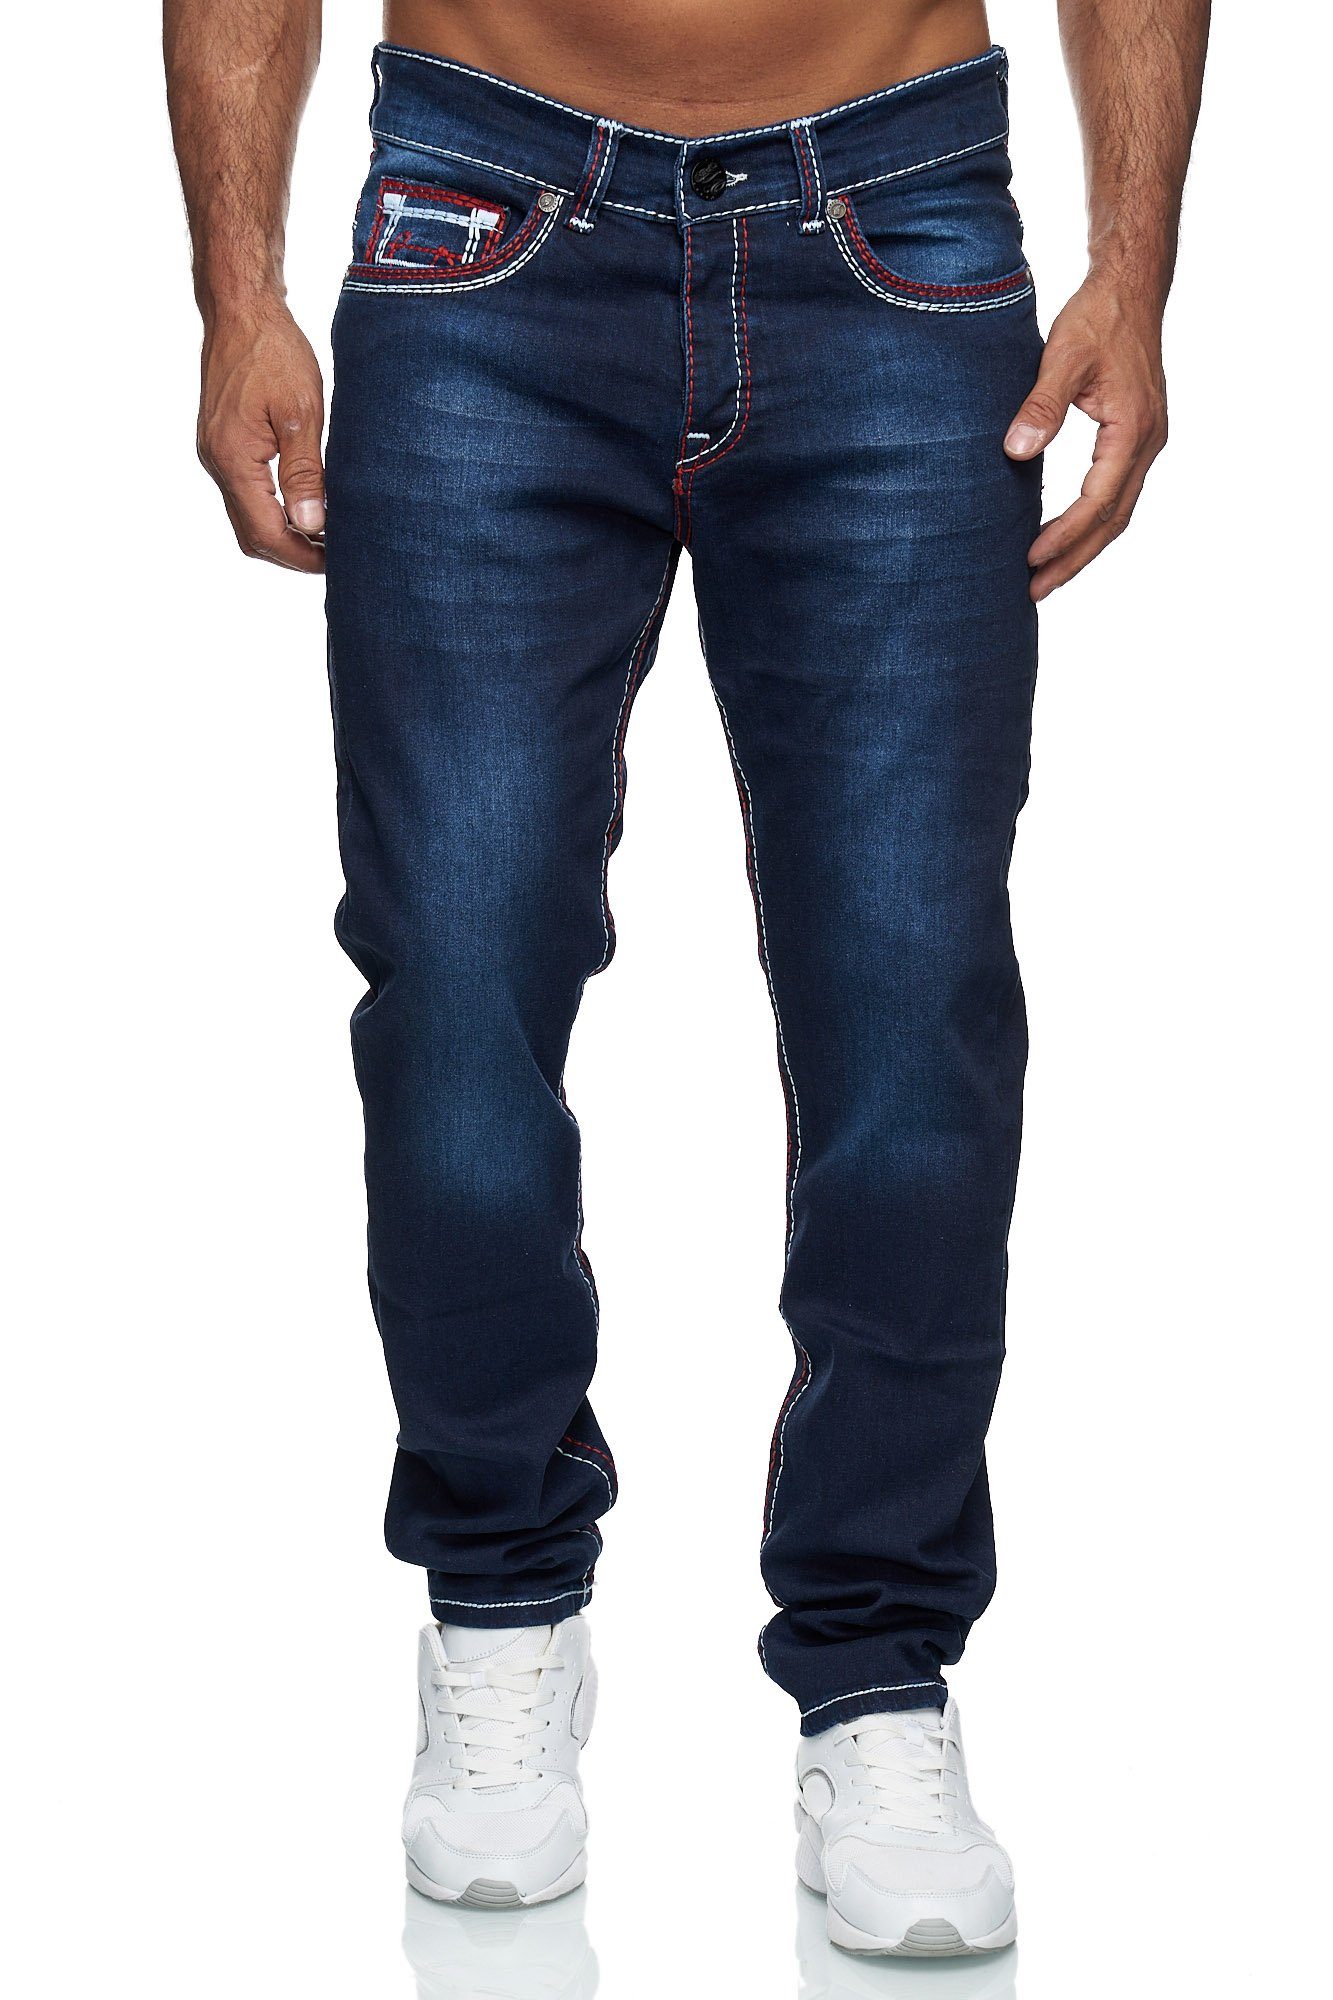 Herren Baxboy Denim 20897-3 Neon-Naht Jeans Regular-fit-Jeans Stonewashed Fit Rot Straight Dicke Stretch